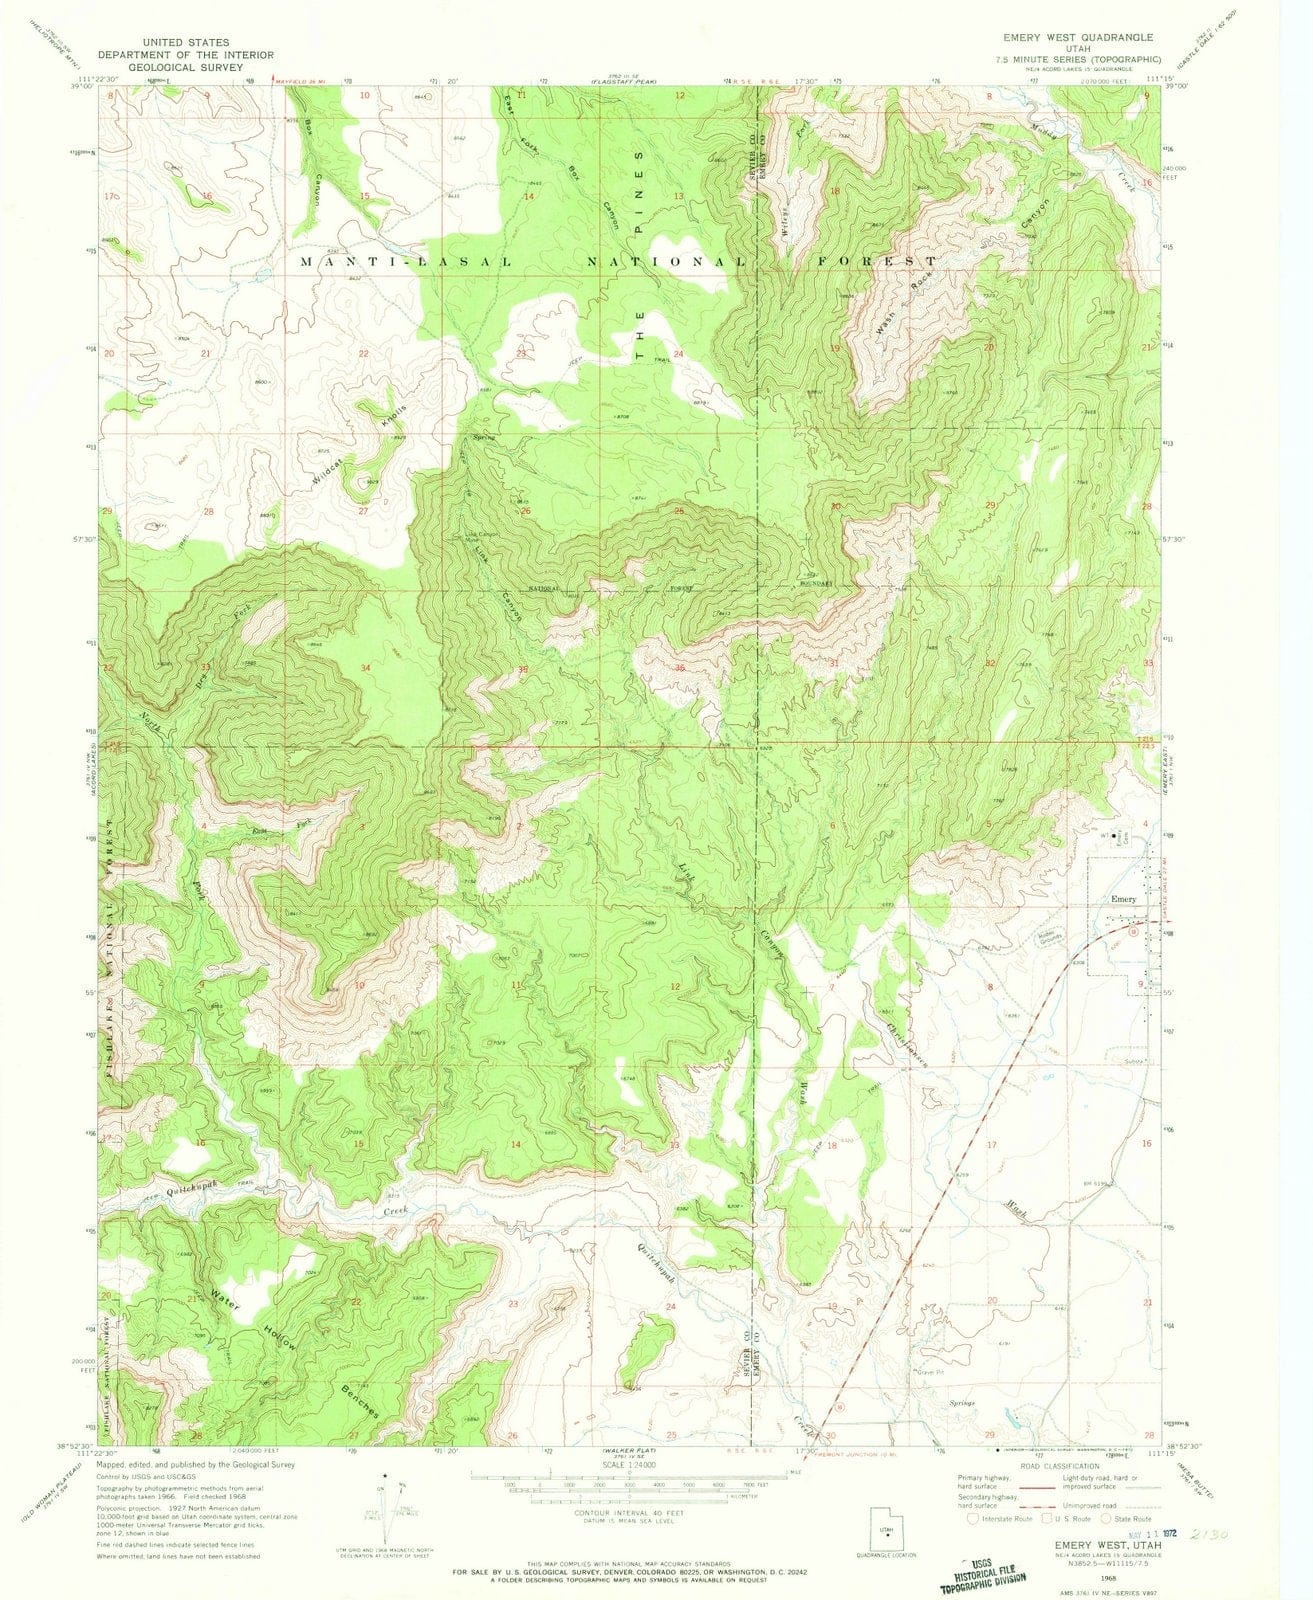 1968 Emery West, UT - Utah - USGS Topographic Map